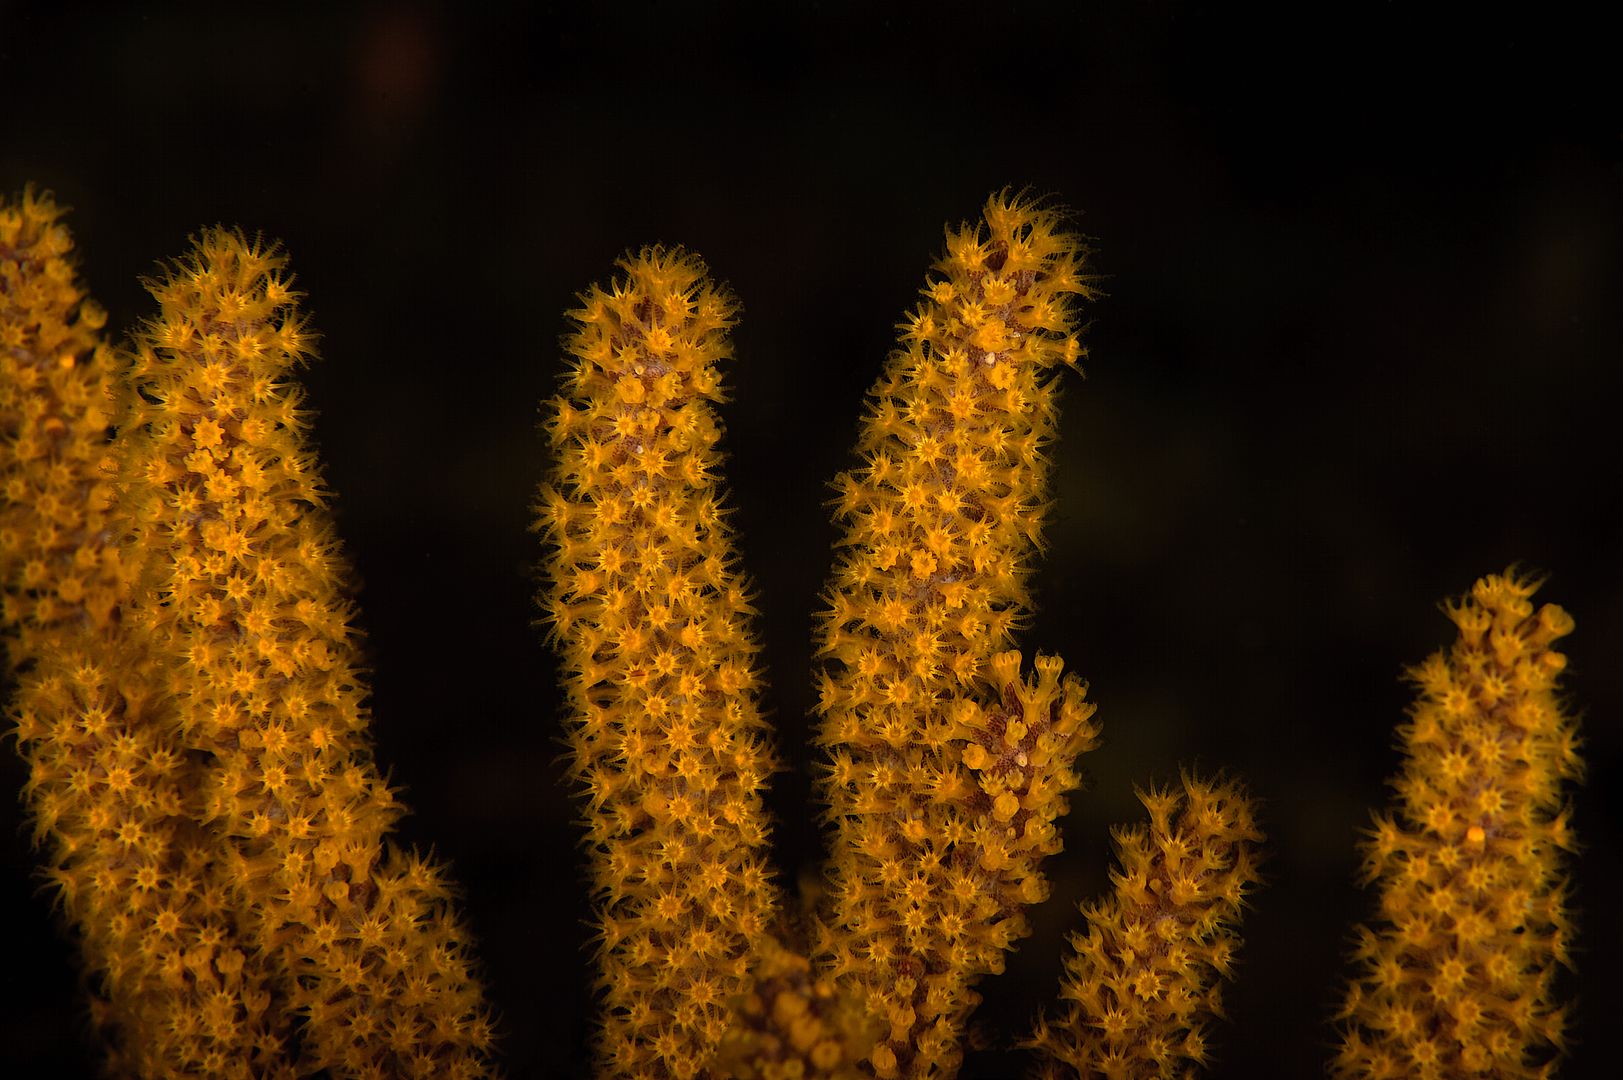  photo Muricea californica California Golden gorgonian_zpsgznjgnvq.jpg